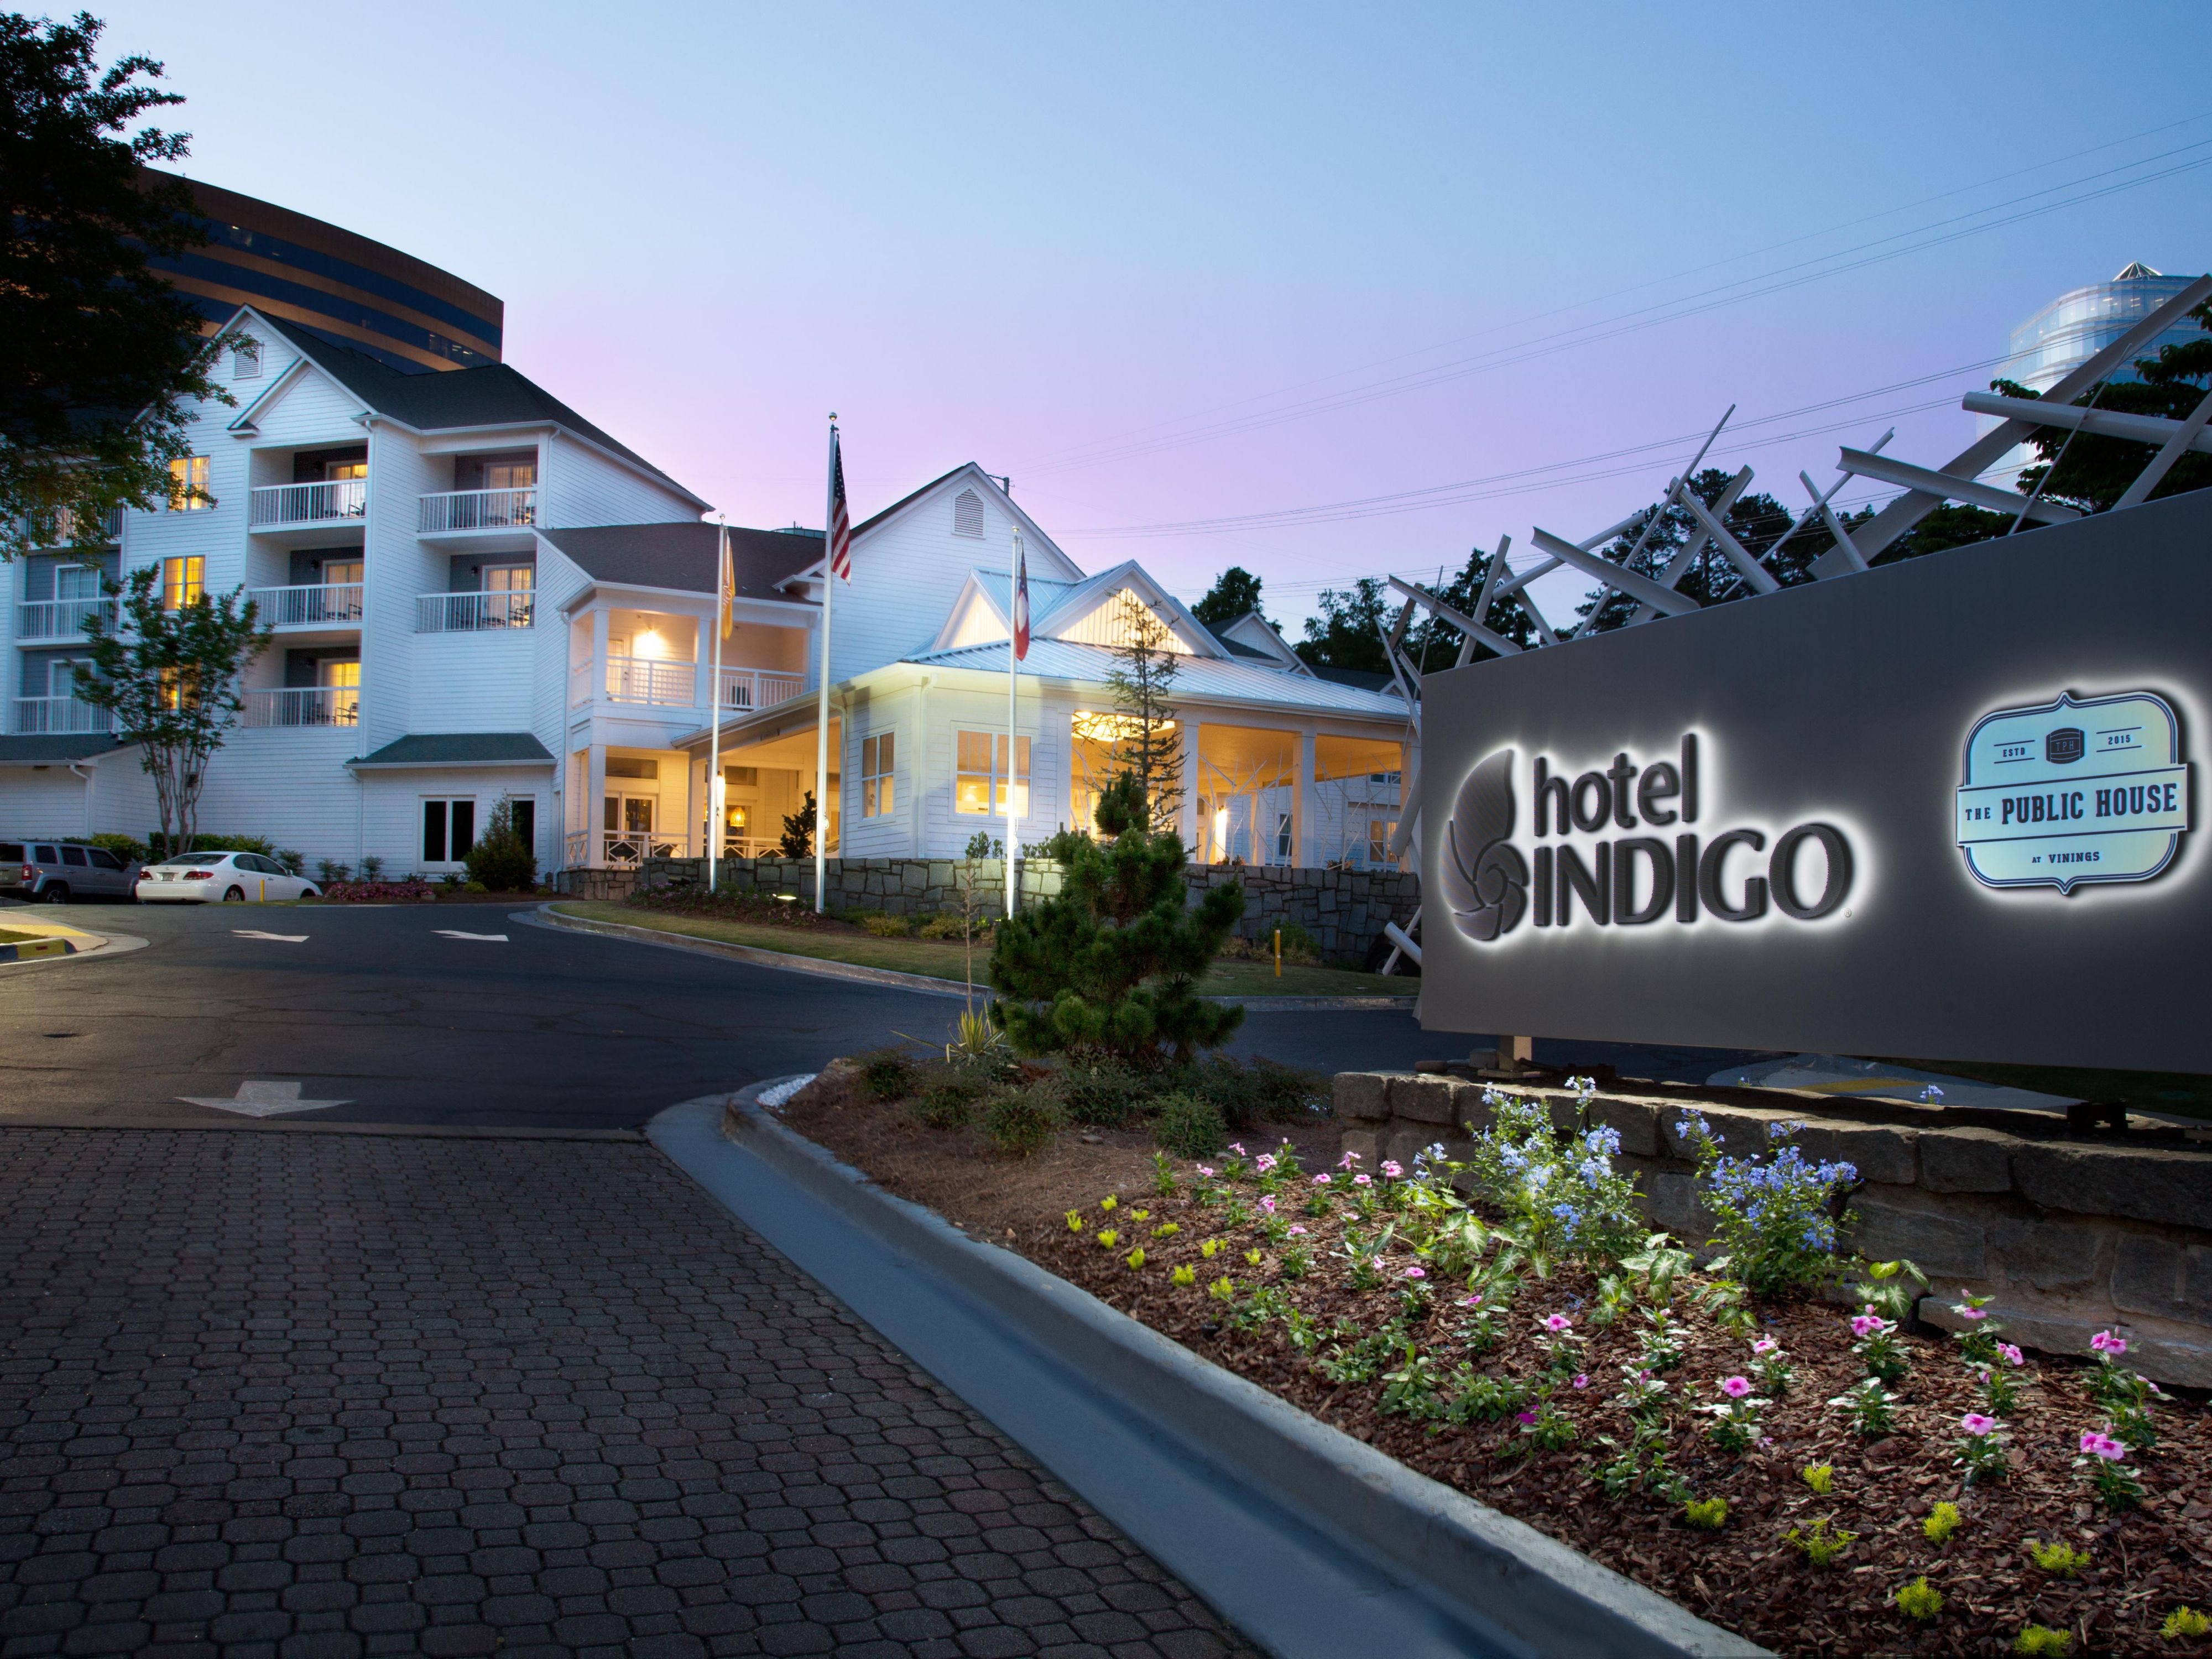 hotels in kennesaw ga 30152